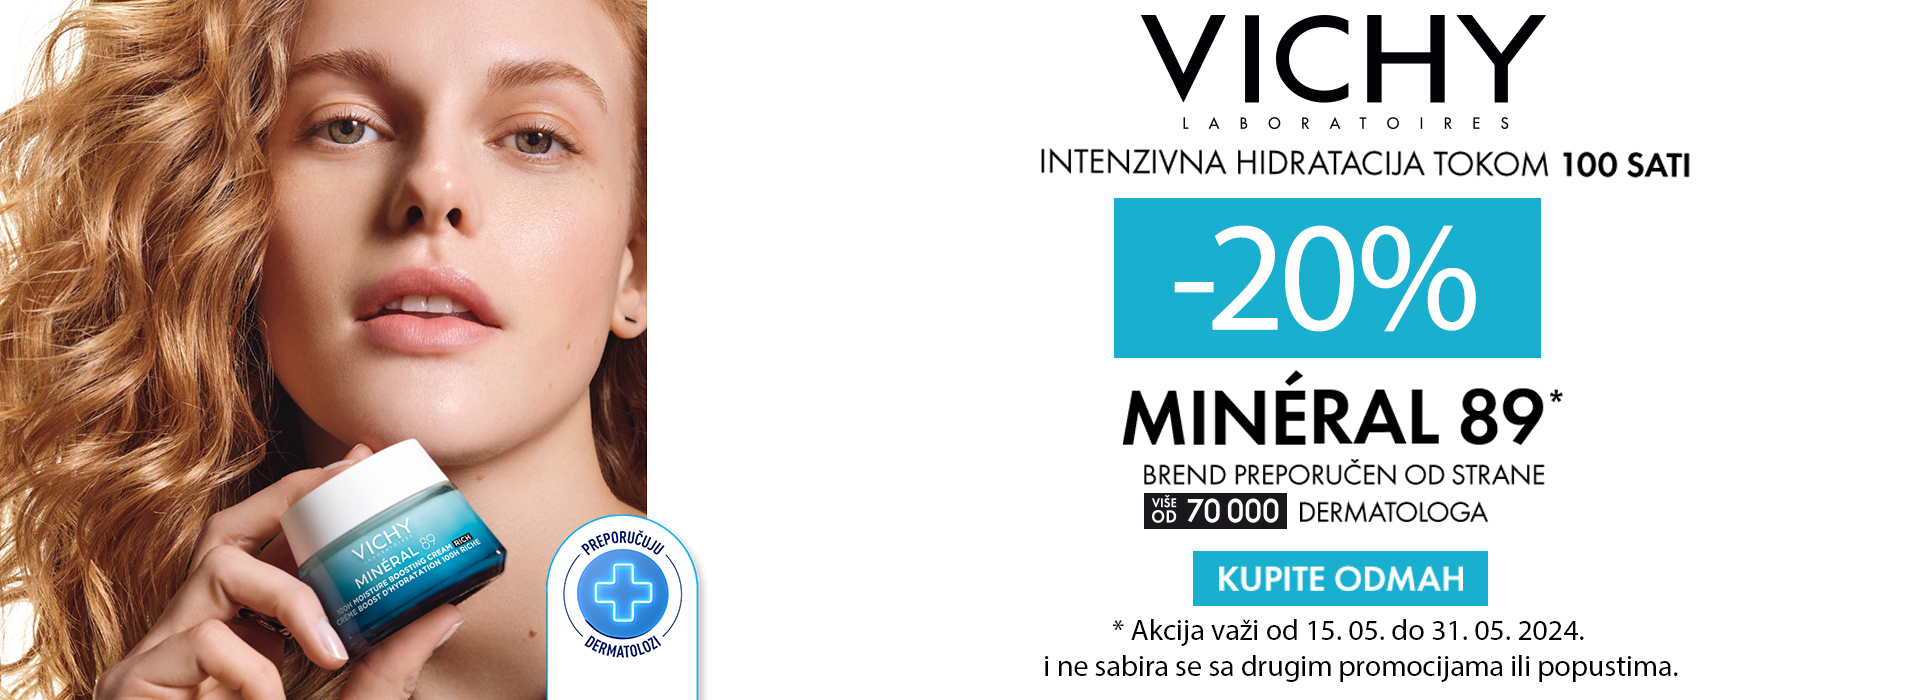 Vichy Mineral 05/24 brend - Srbotrade